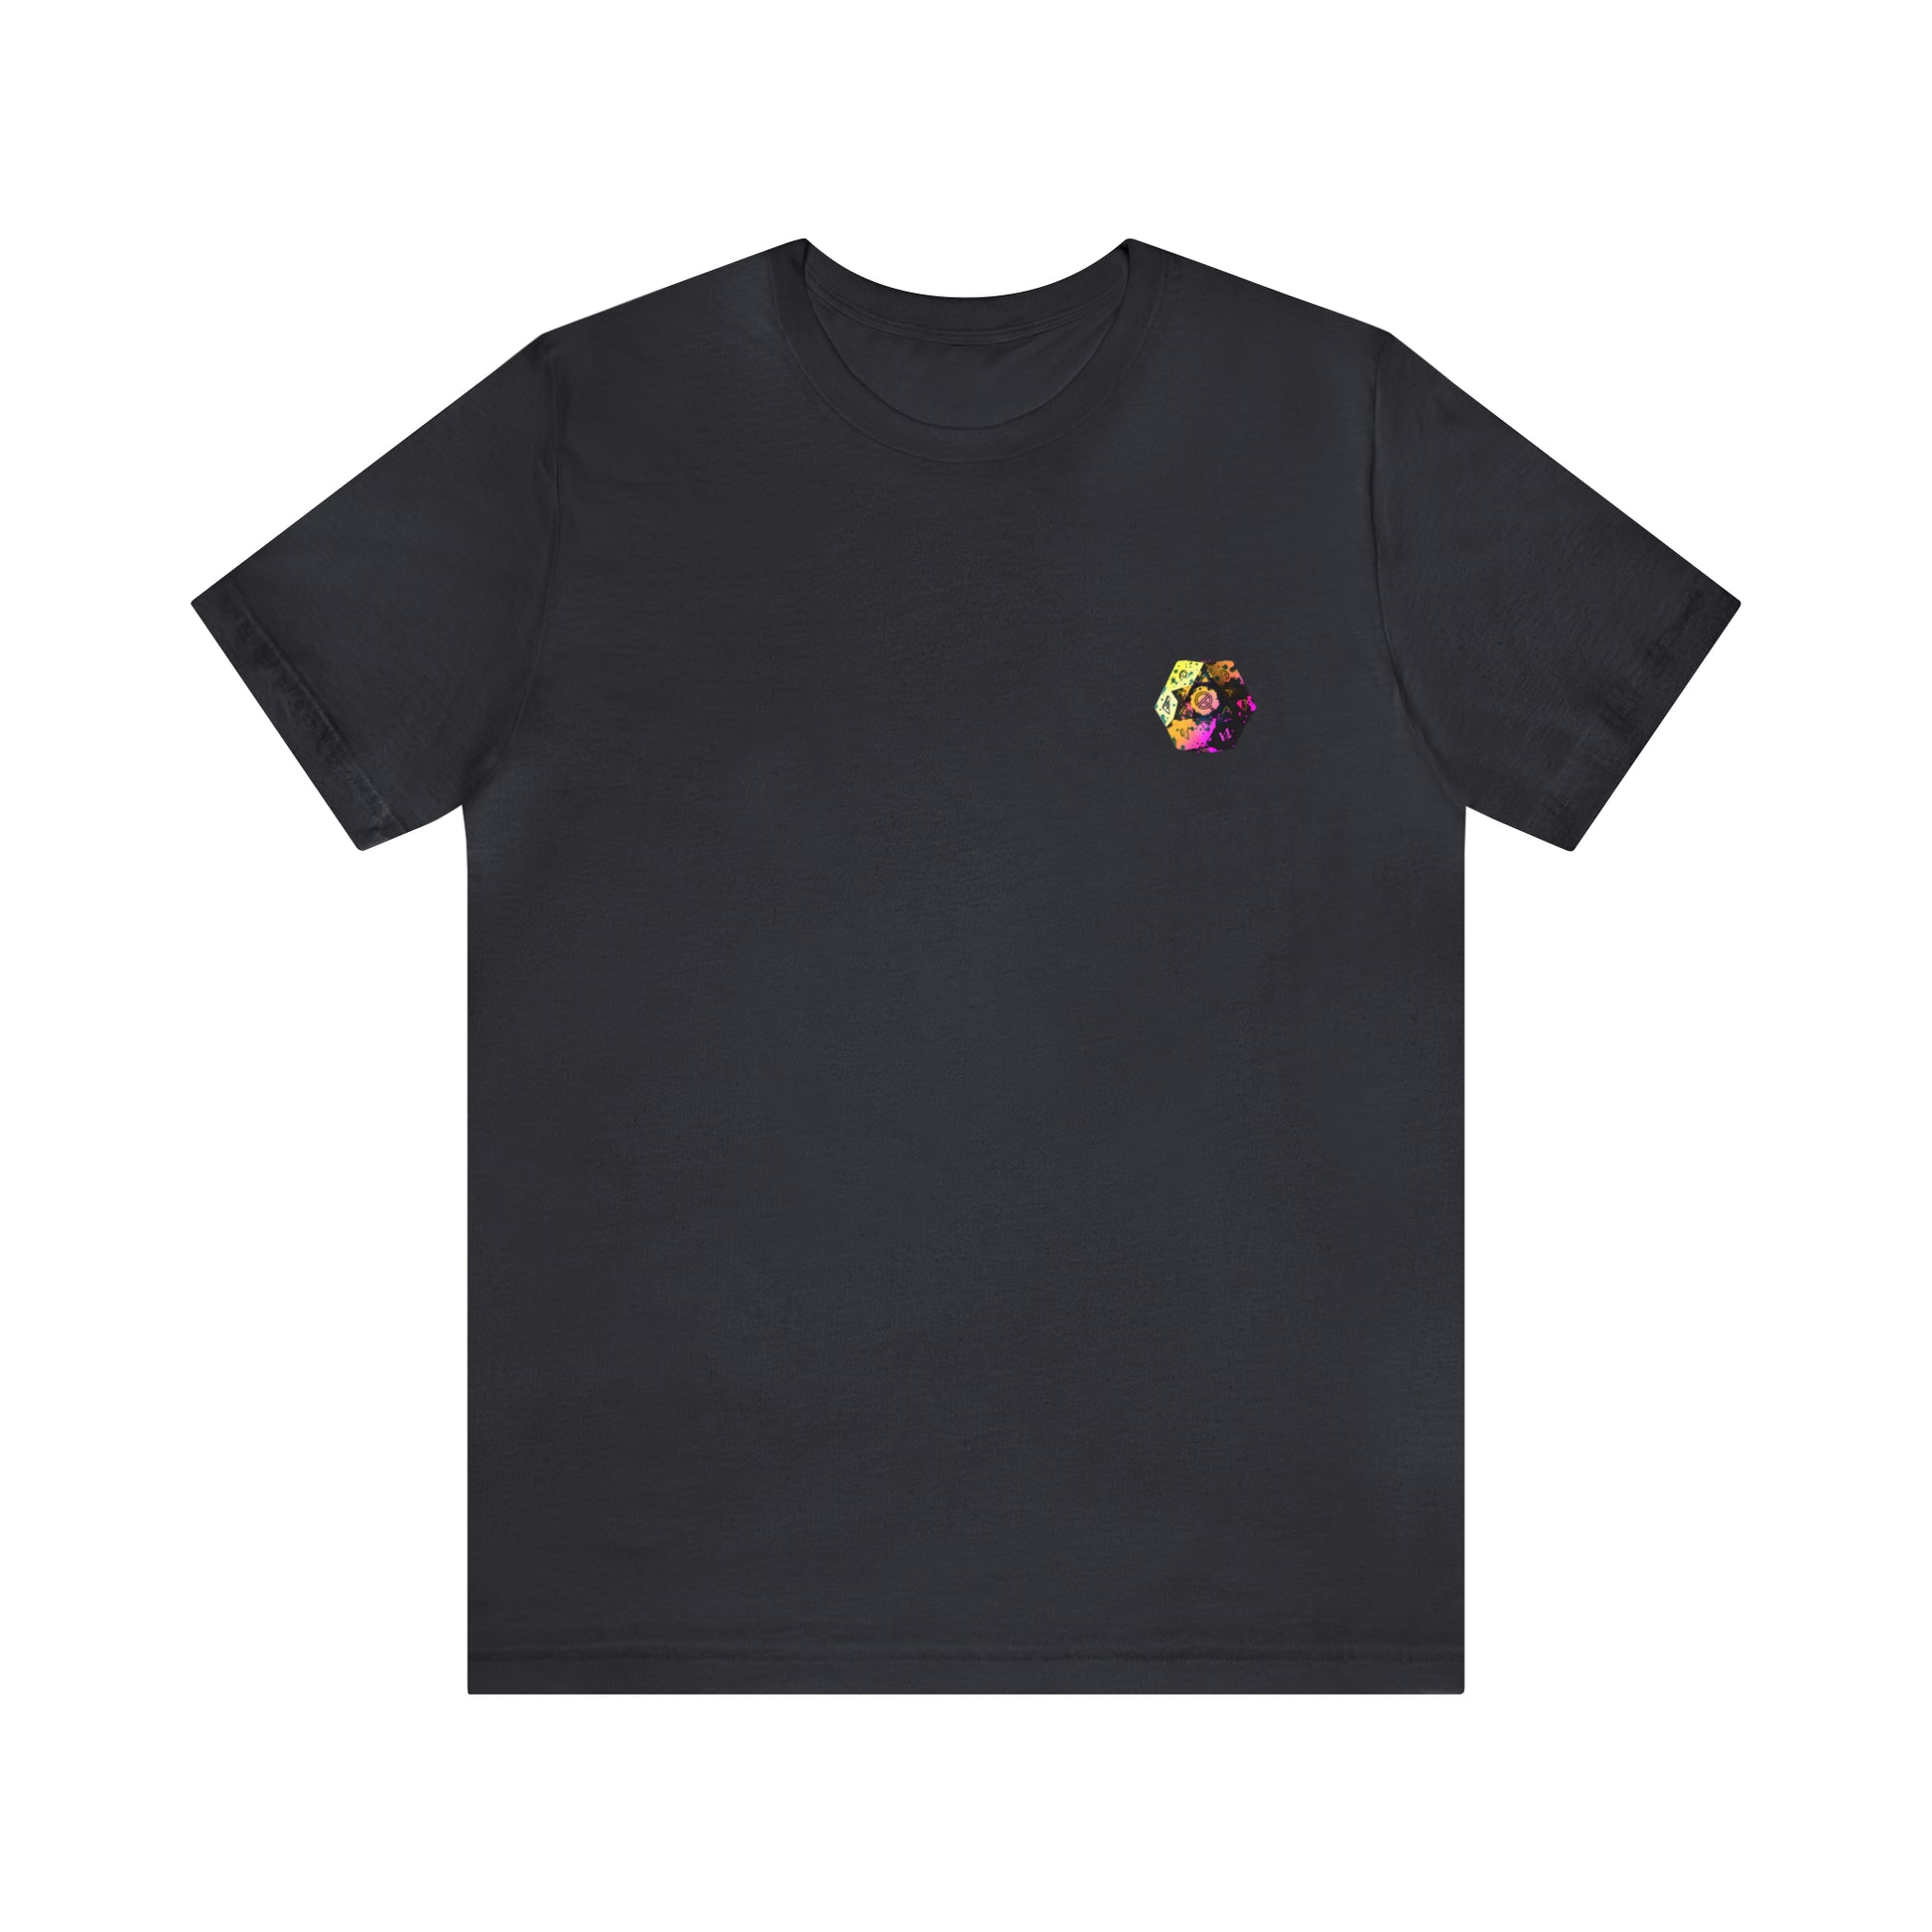 dark-grey-quest-thread-tee-shirt-with-small-neon-splatter-d20-dice-on-left-chest